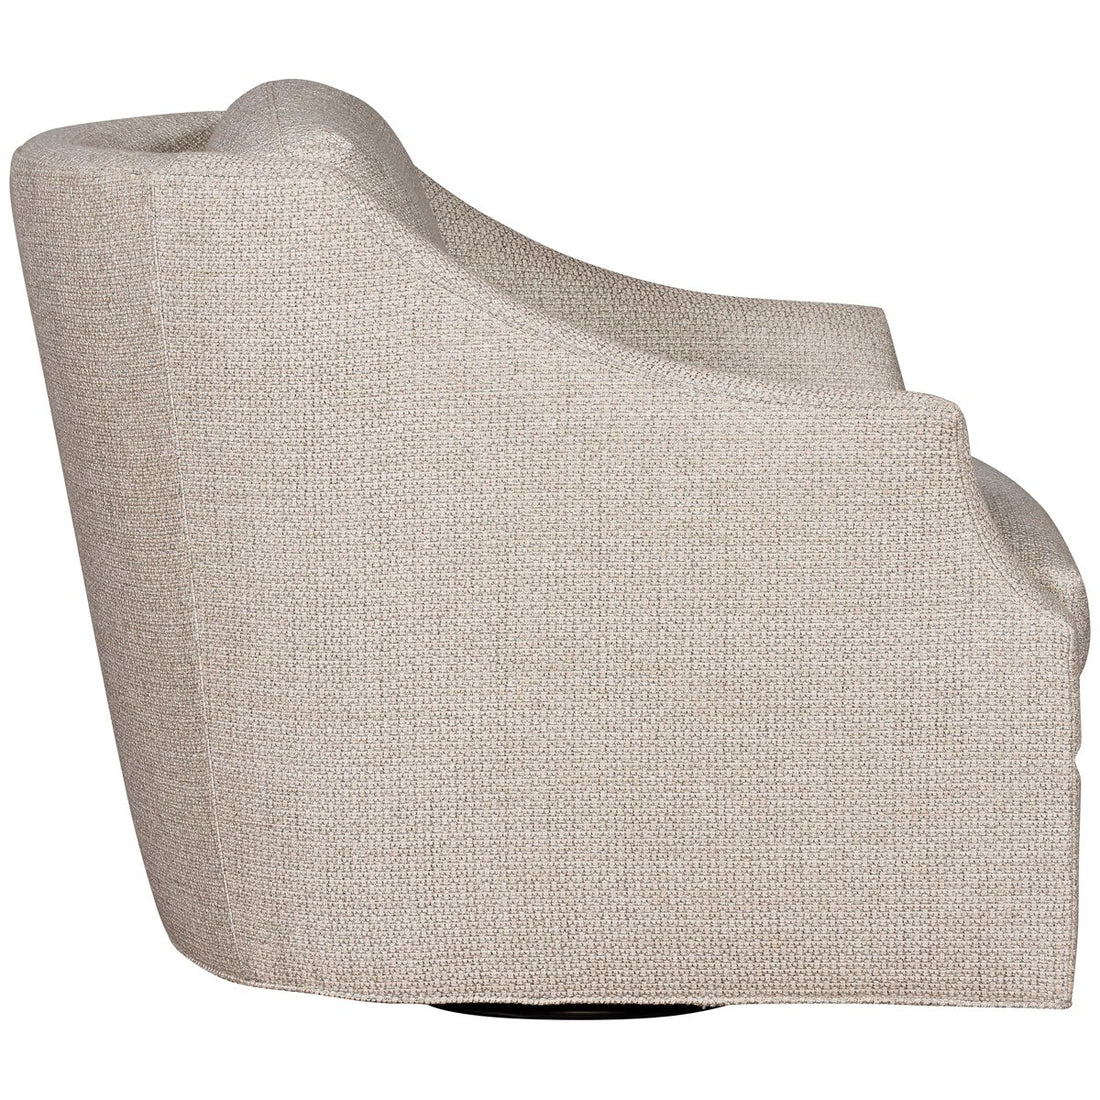 Vanguard Furniture Fiora Swivel Chair